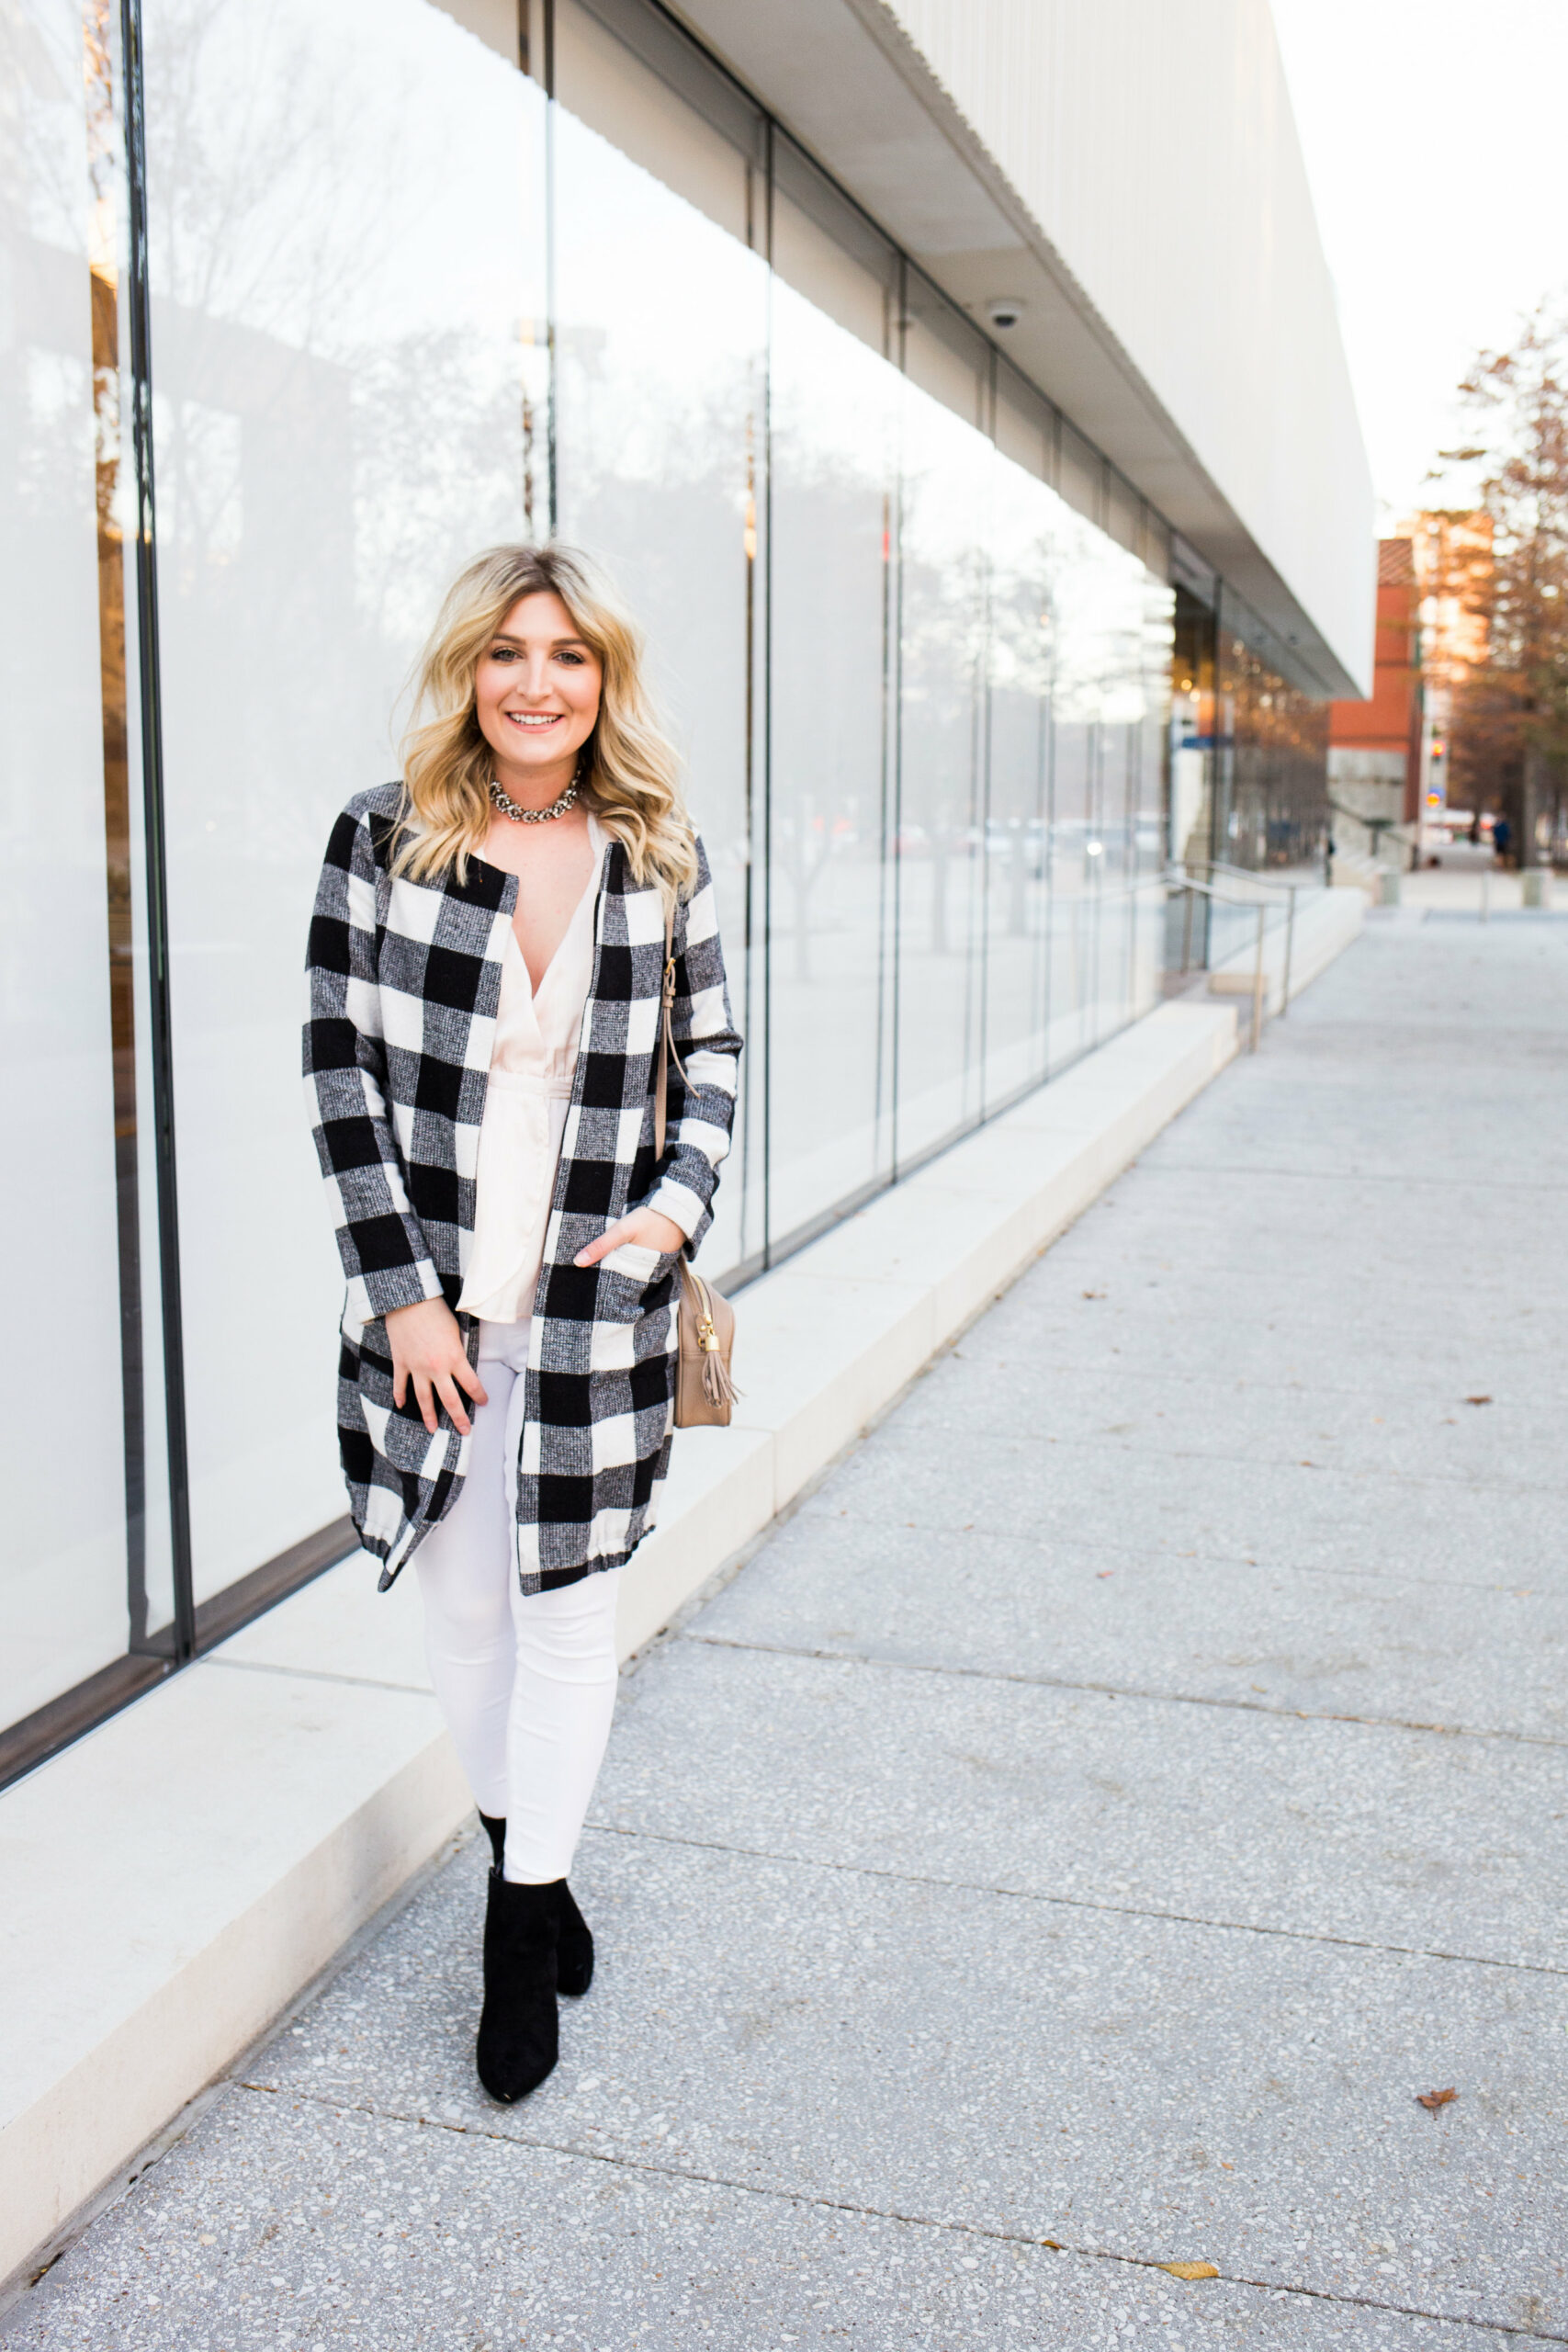 Checkered Winter Coat + Soft Winter Colors | AMS Blog